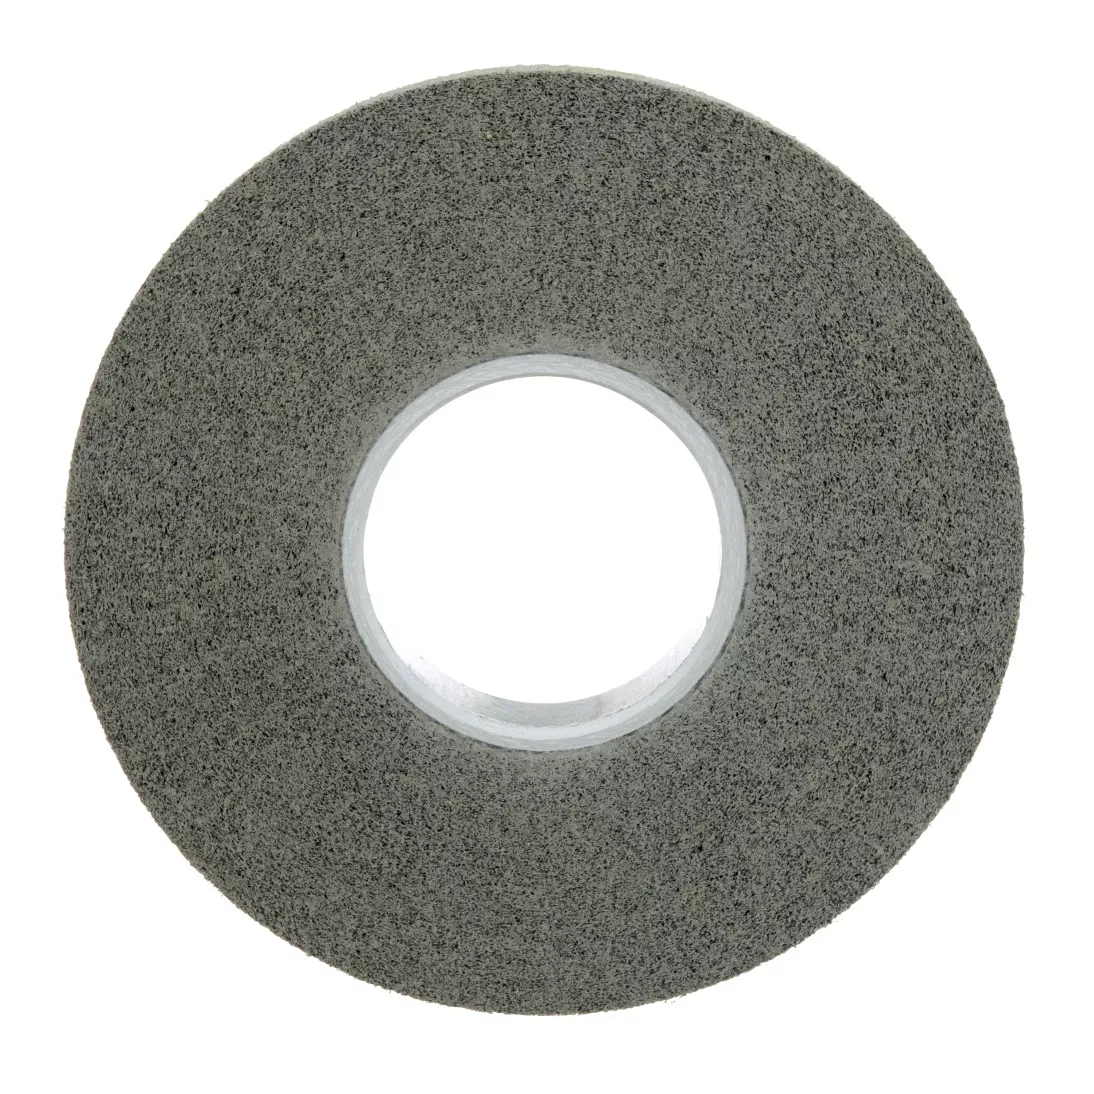 Standard Abrasives™ Deburring Wheel, 854393, 9S Fine, 8 in x 1 in x 3
in, 3 ea/Case